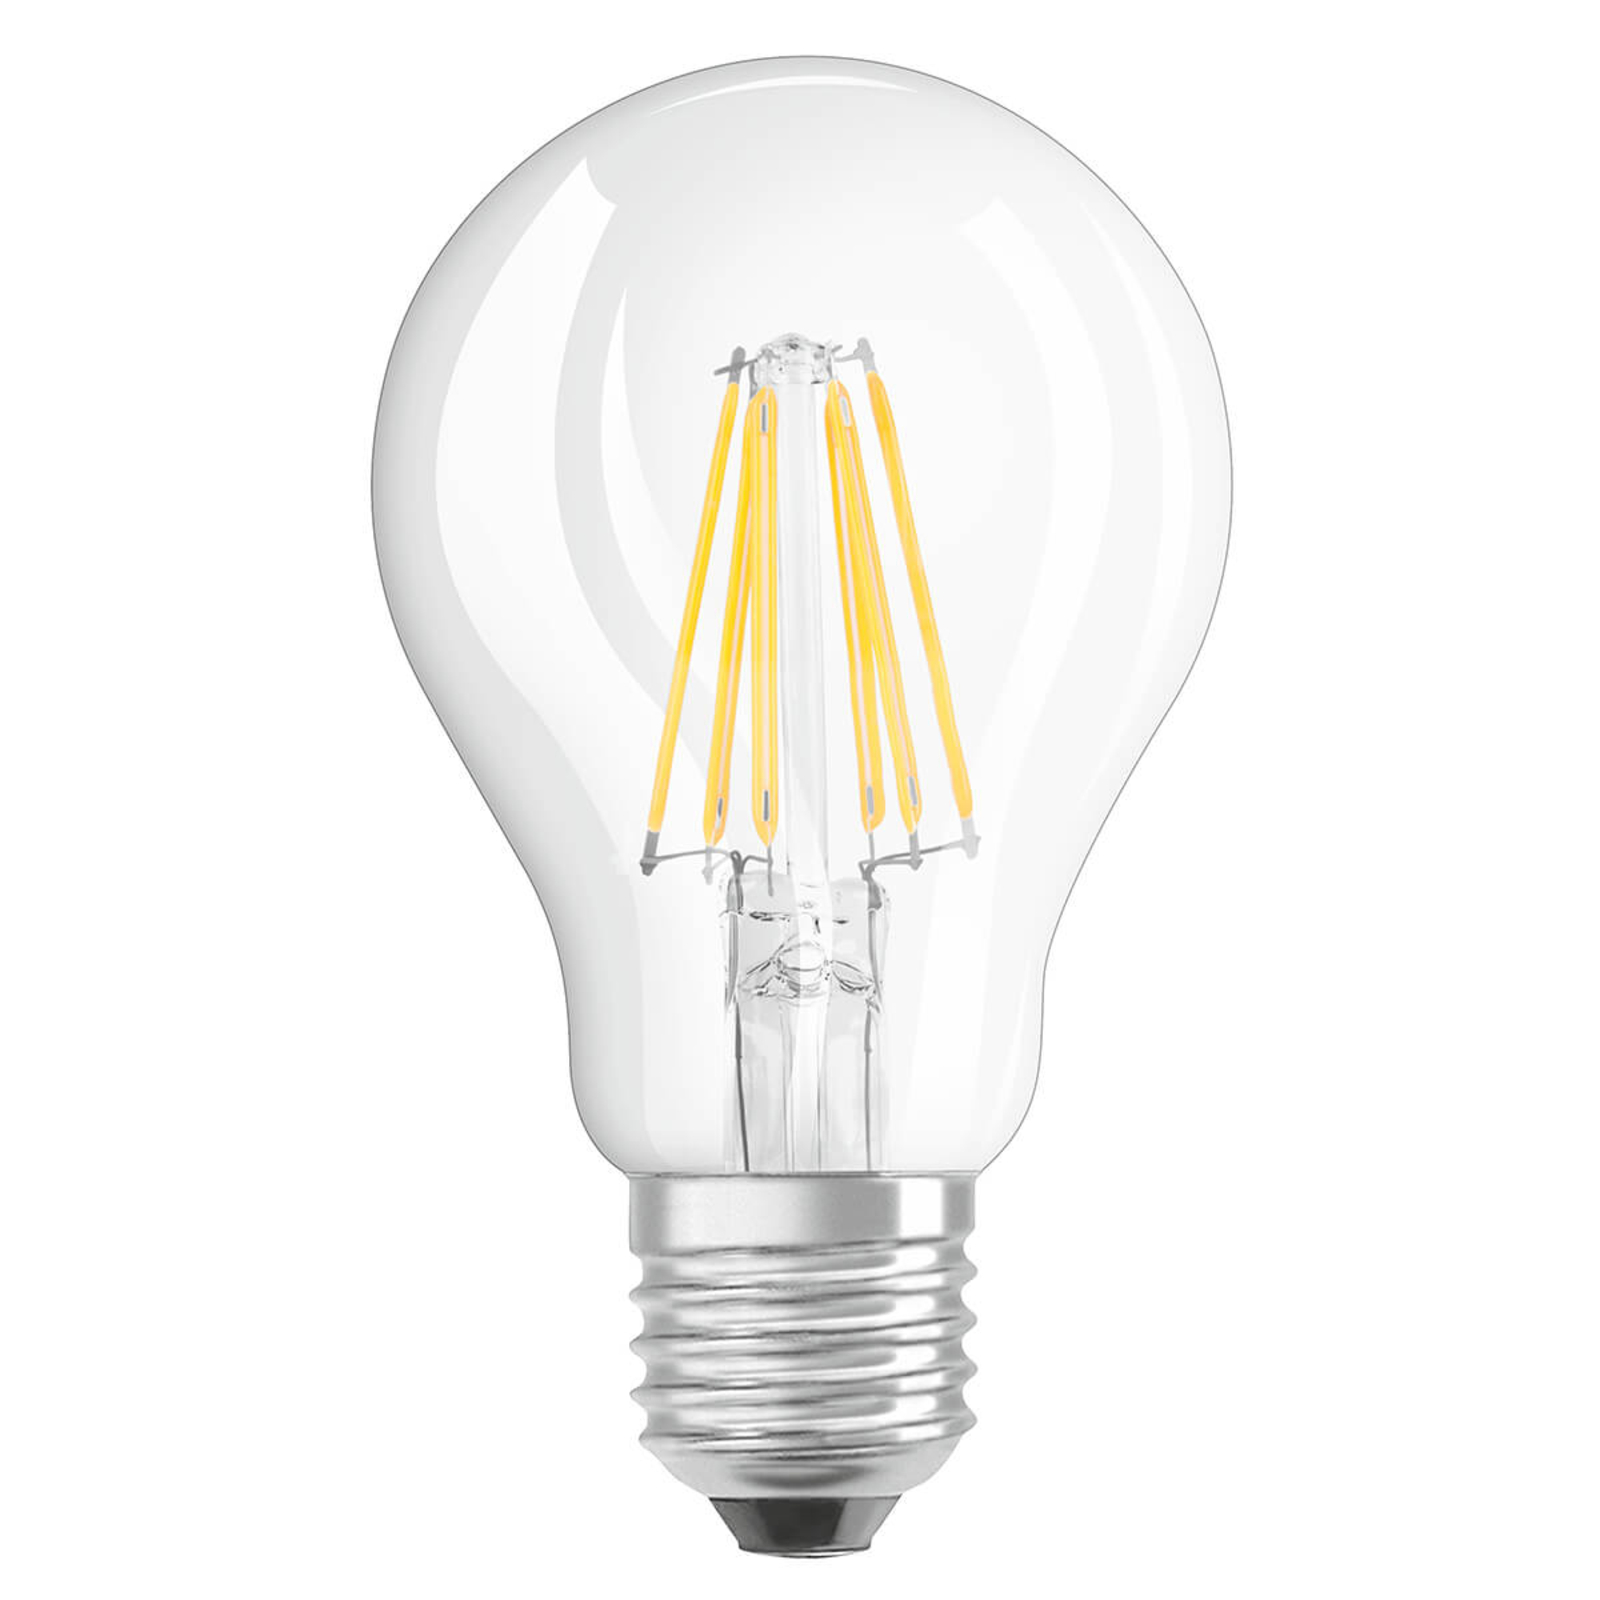 OSRAM-LED-lamppu E27 6,5W perusvalkoinen 806 lm